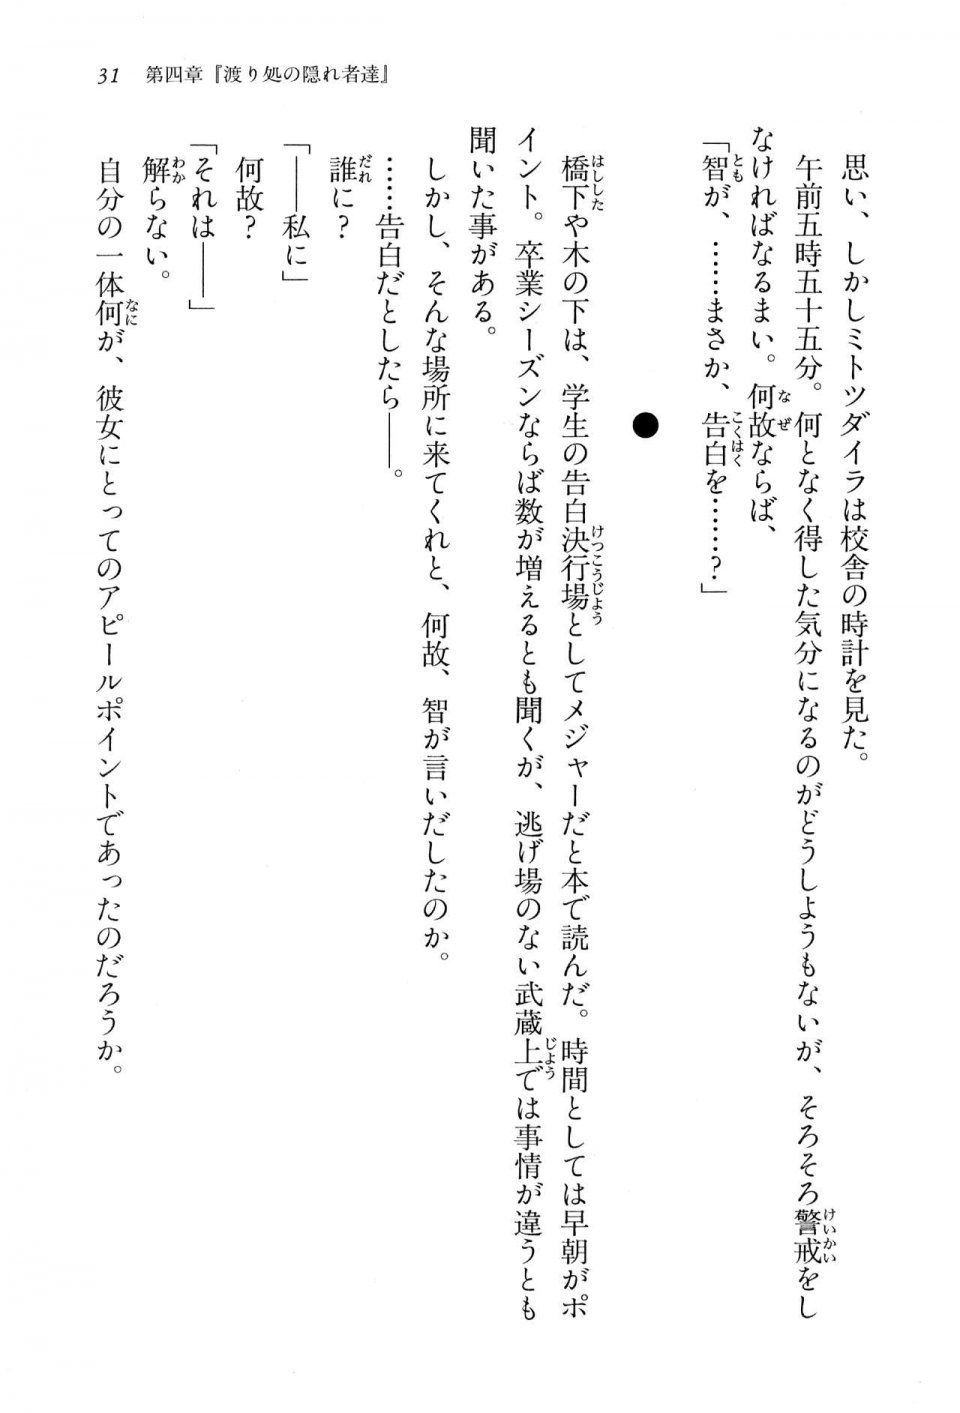 Kyoukai Senjou no Horizon BD Special Mininovel Vol 2(1B) - Photo #35